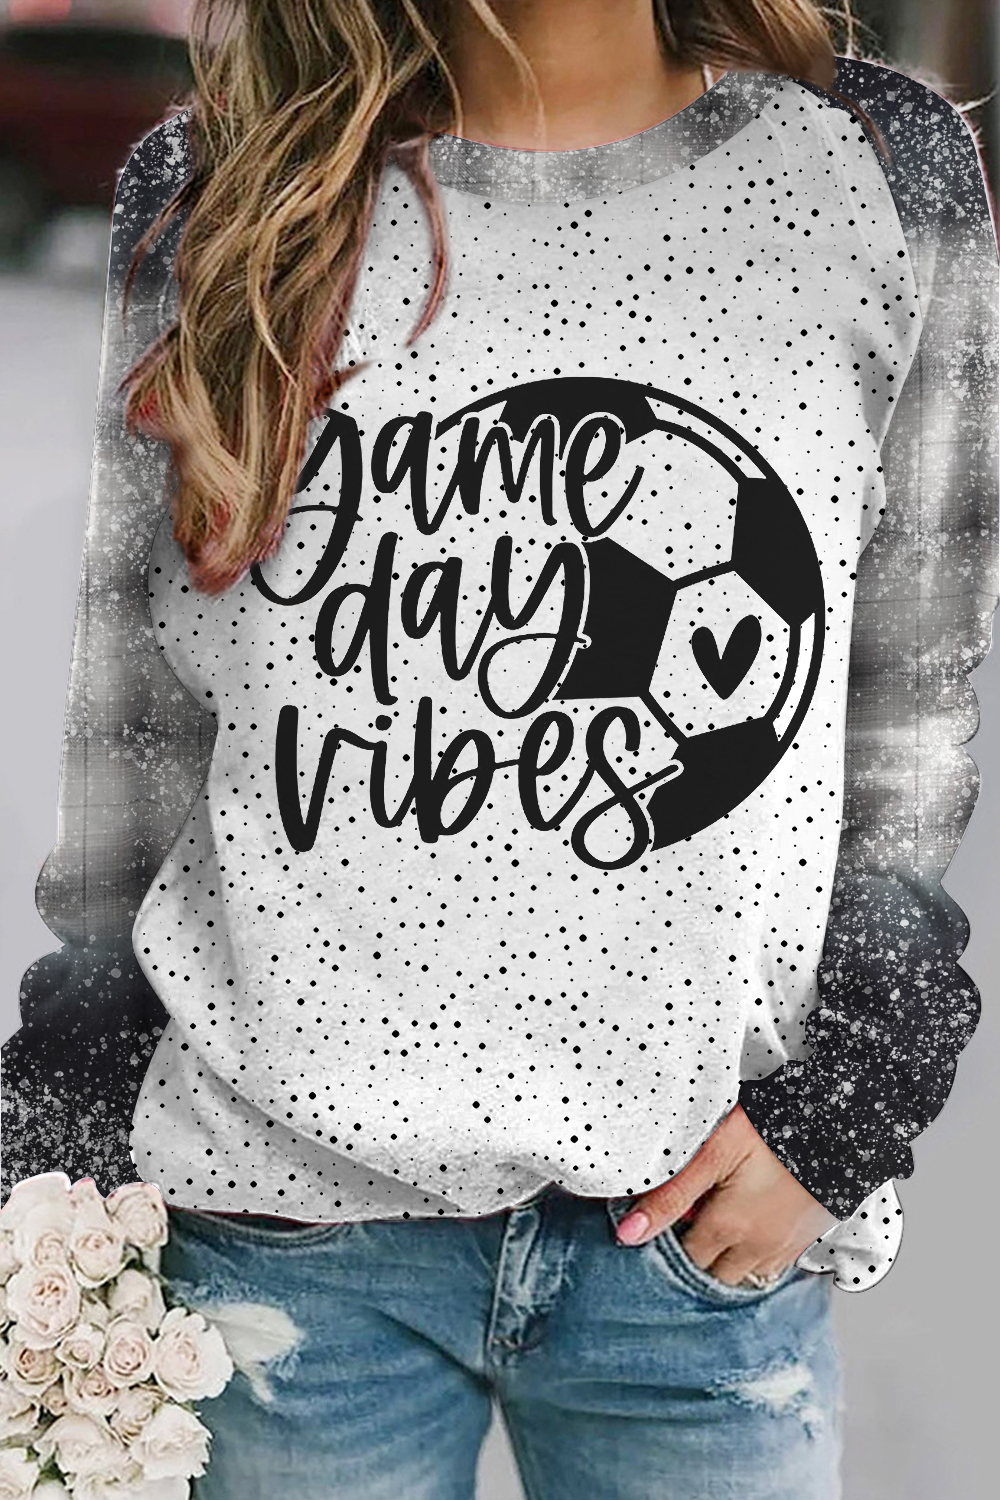 Soccer Ball Game Day Vibes Sweatshirt